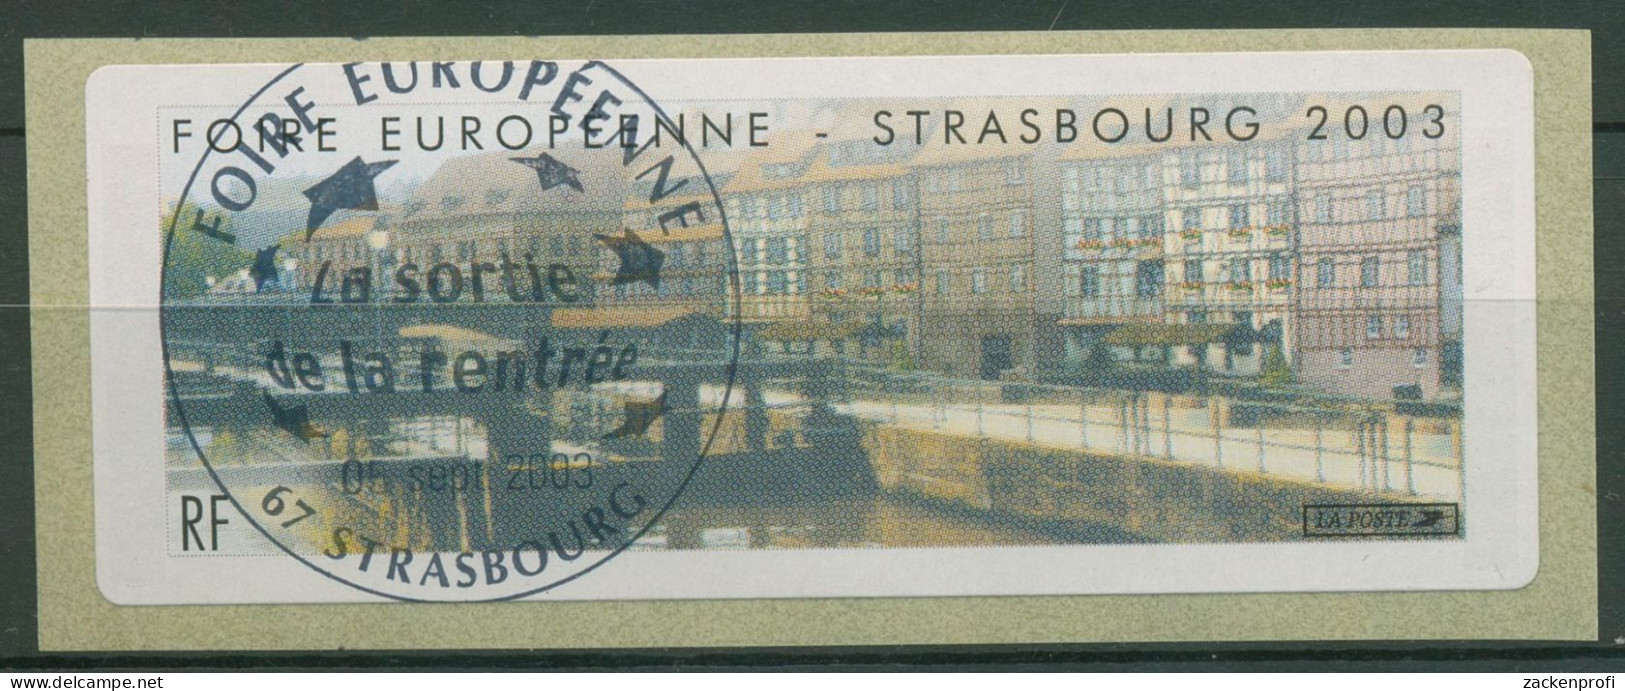 Frankreich 2003 Automatenmarken Europa-Messe Straßburg ATM 30 Gestempelt - 1999-2009 Geïllustreerde Frankeervignetten